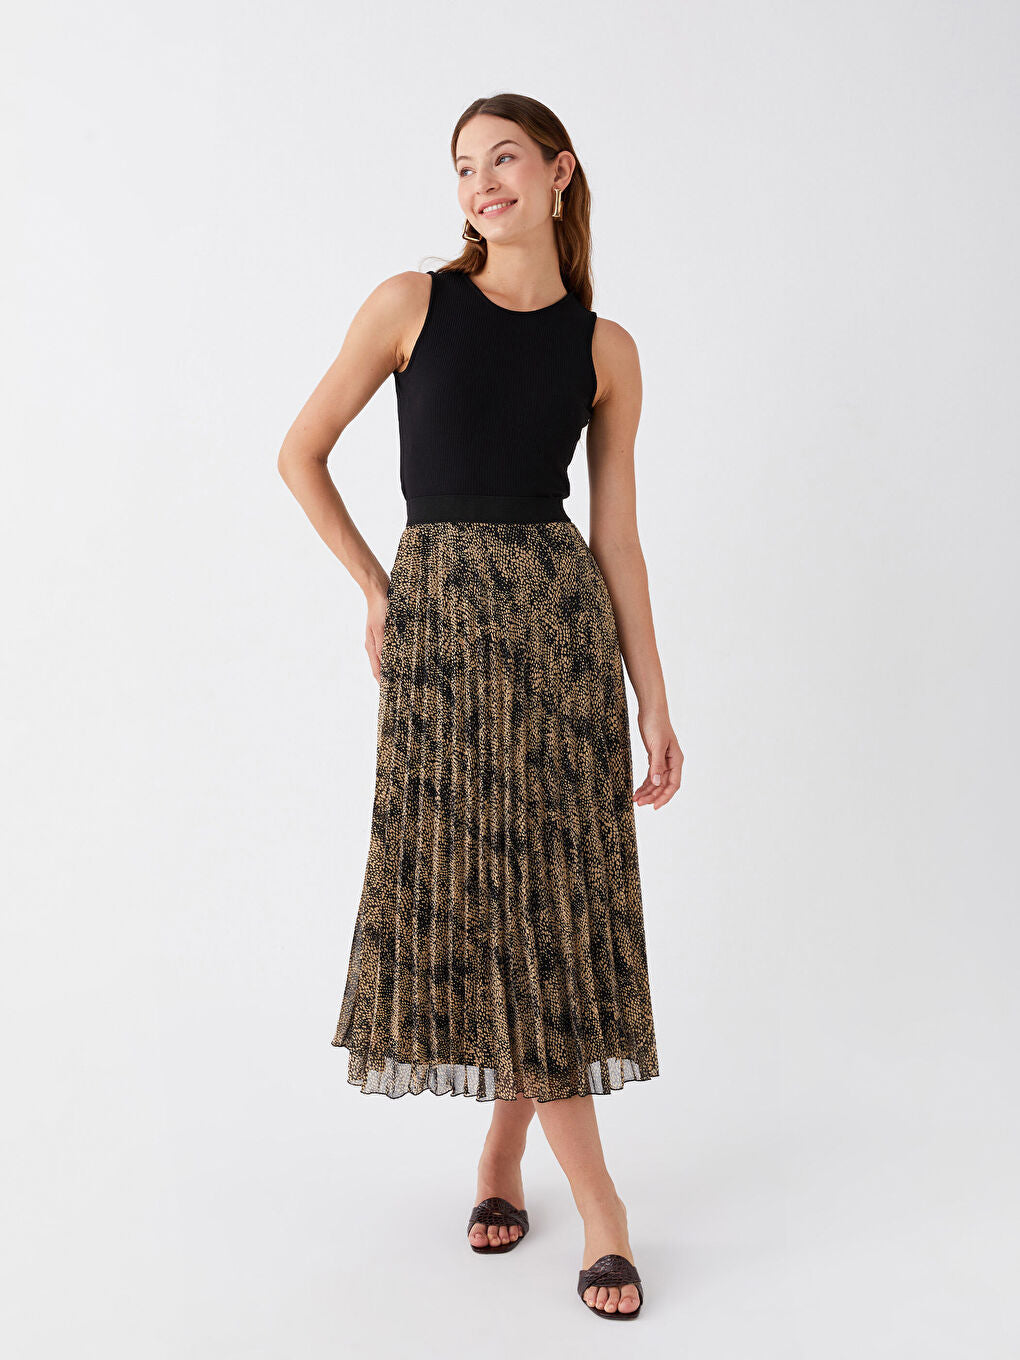 Patterned Women Skirt With Elastic Waist